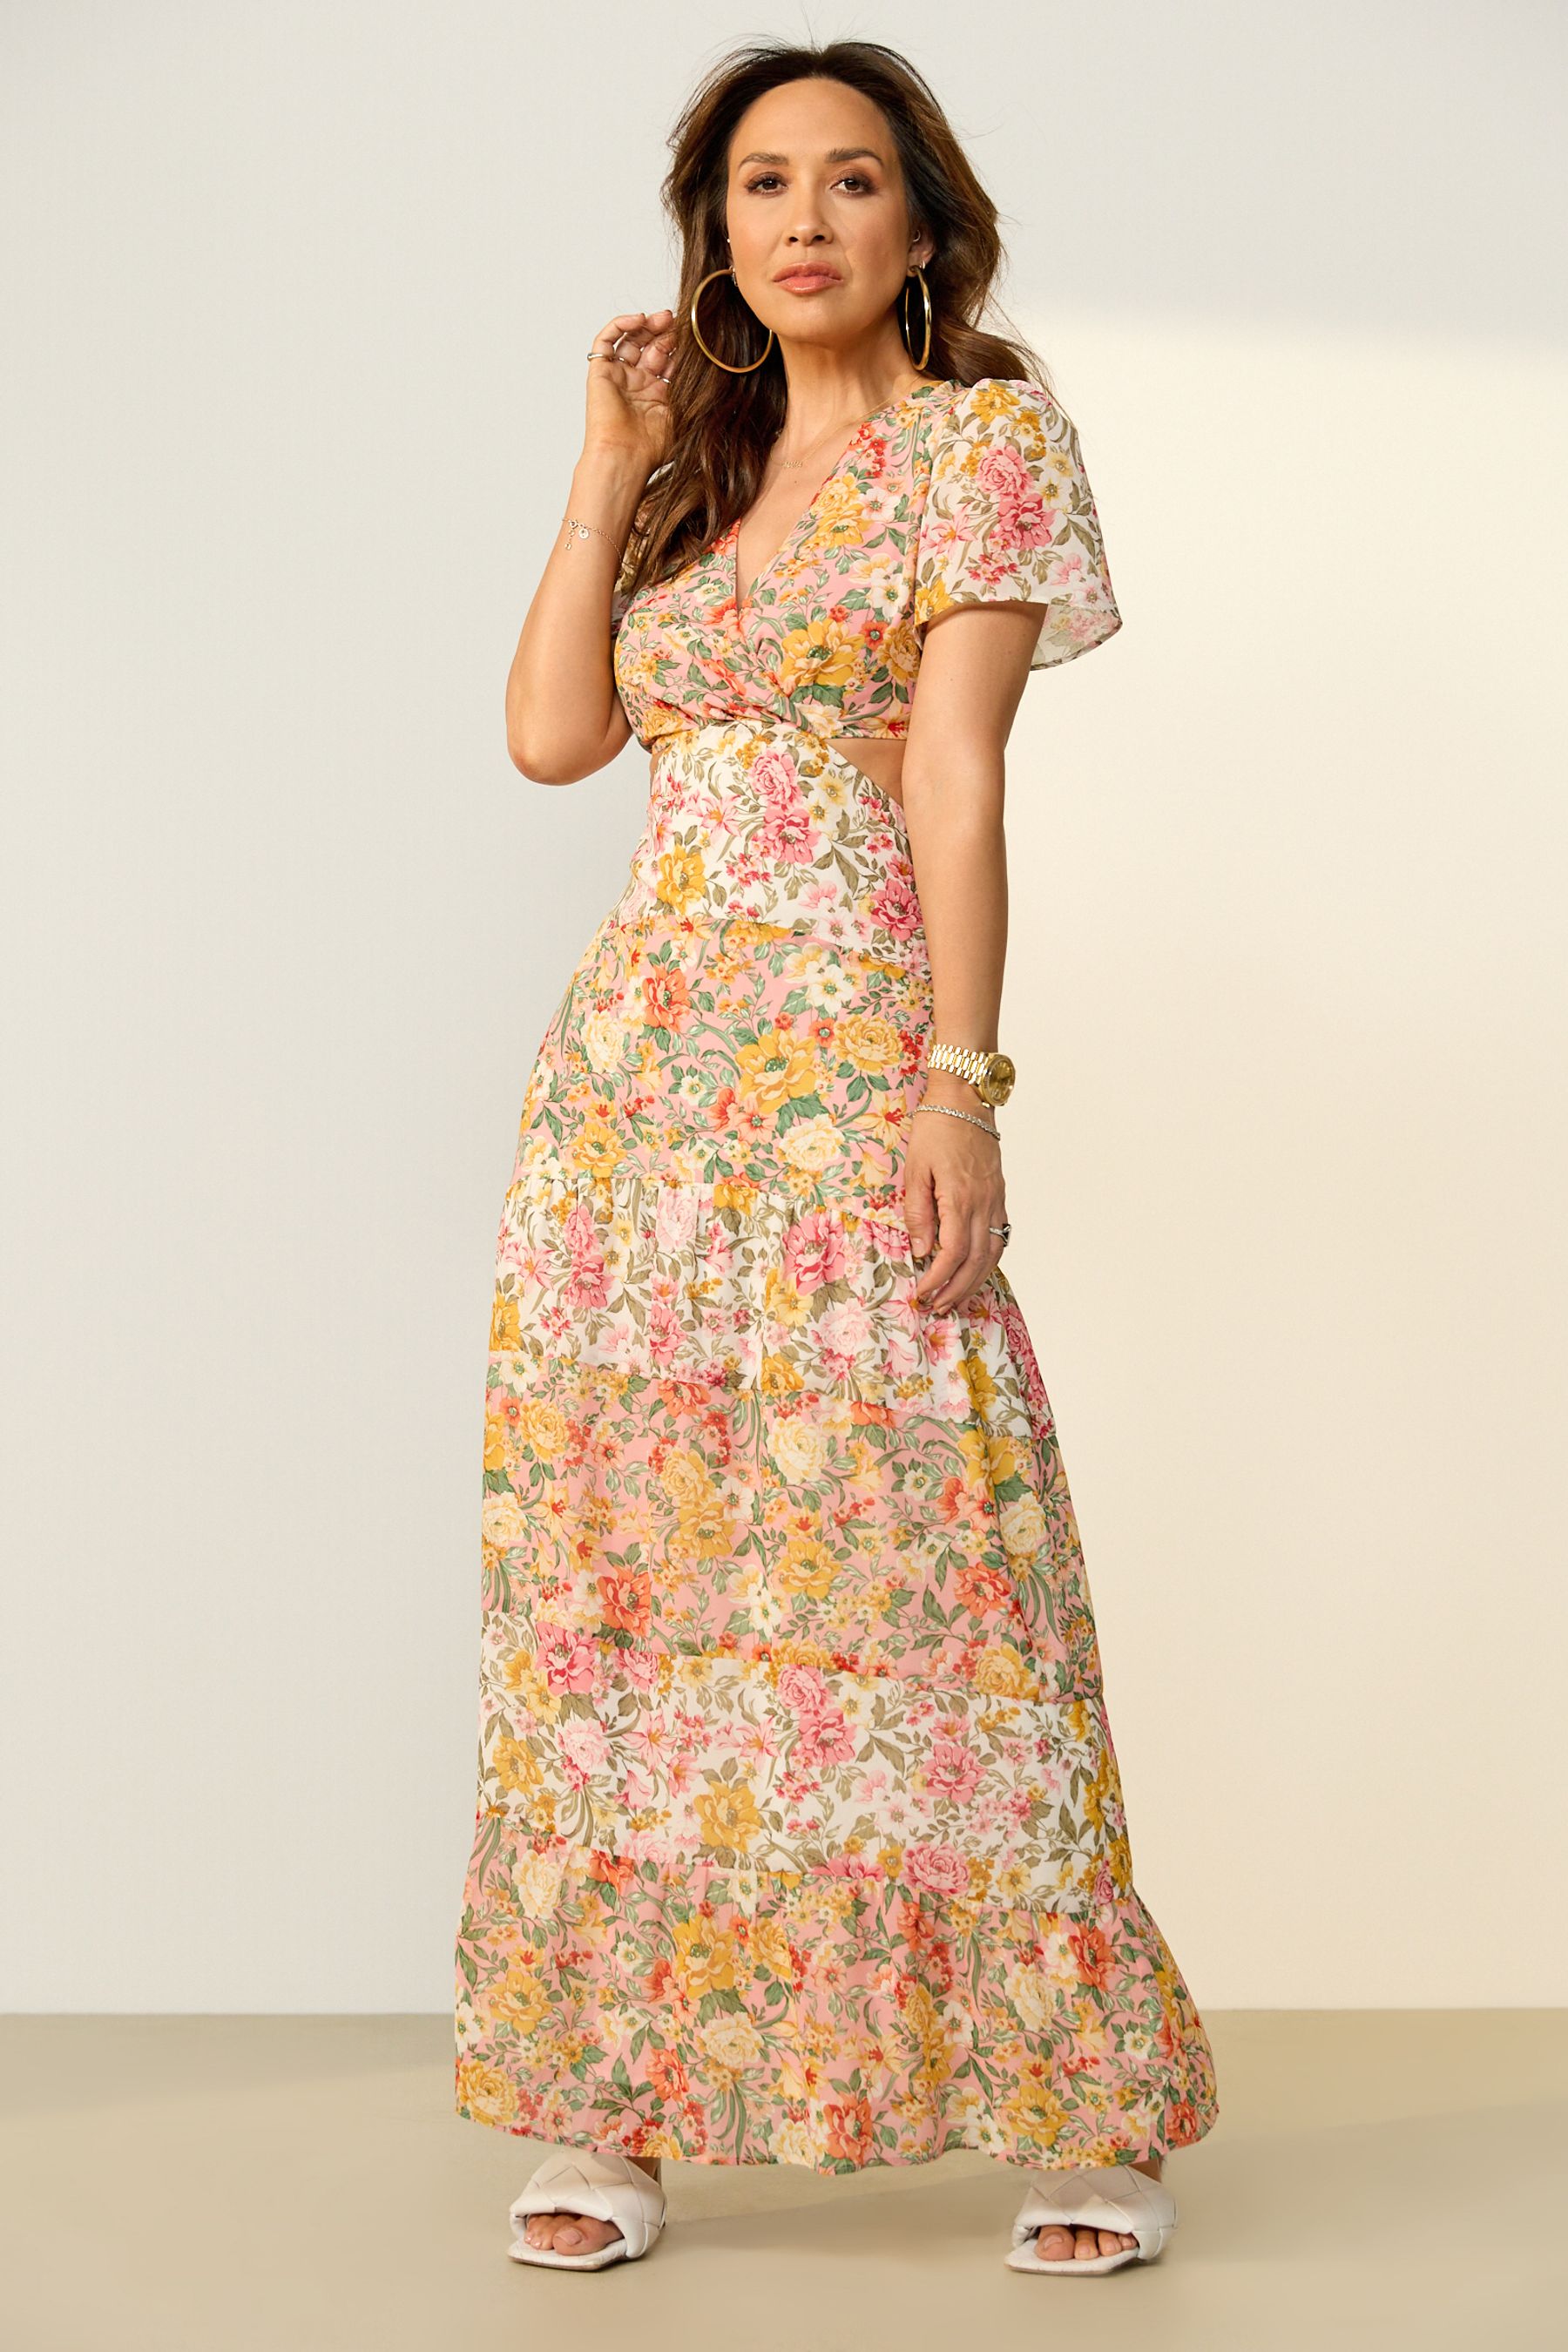 Noya Floral Cutout Maxi Dress – Isabella the label